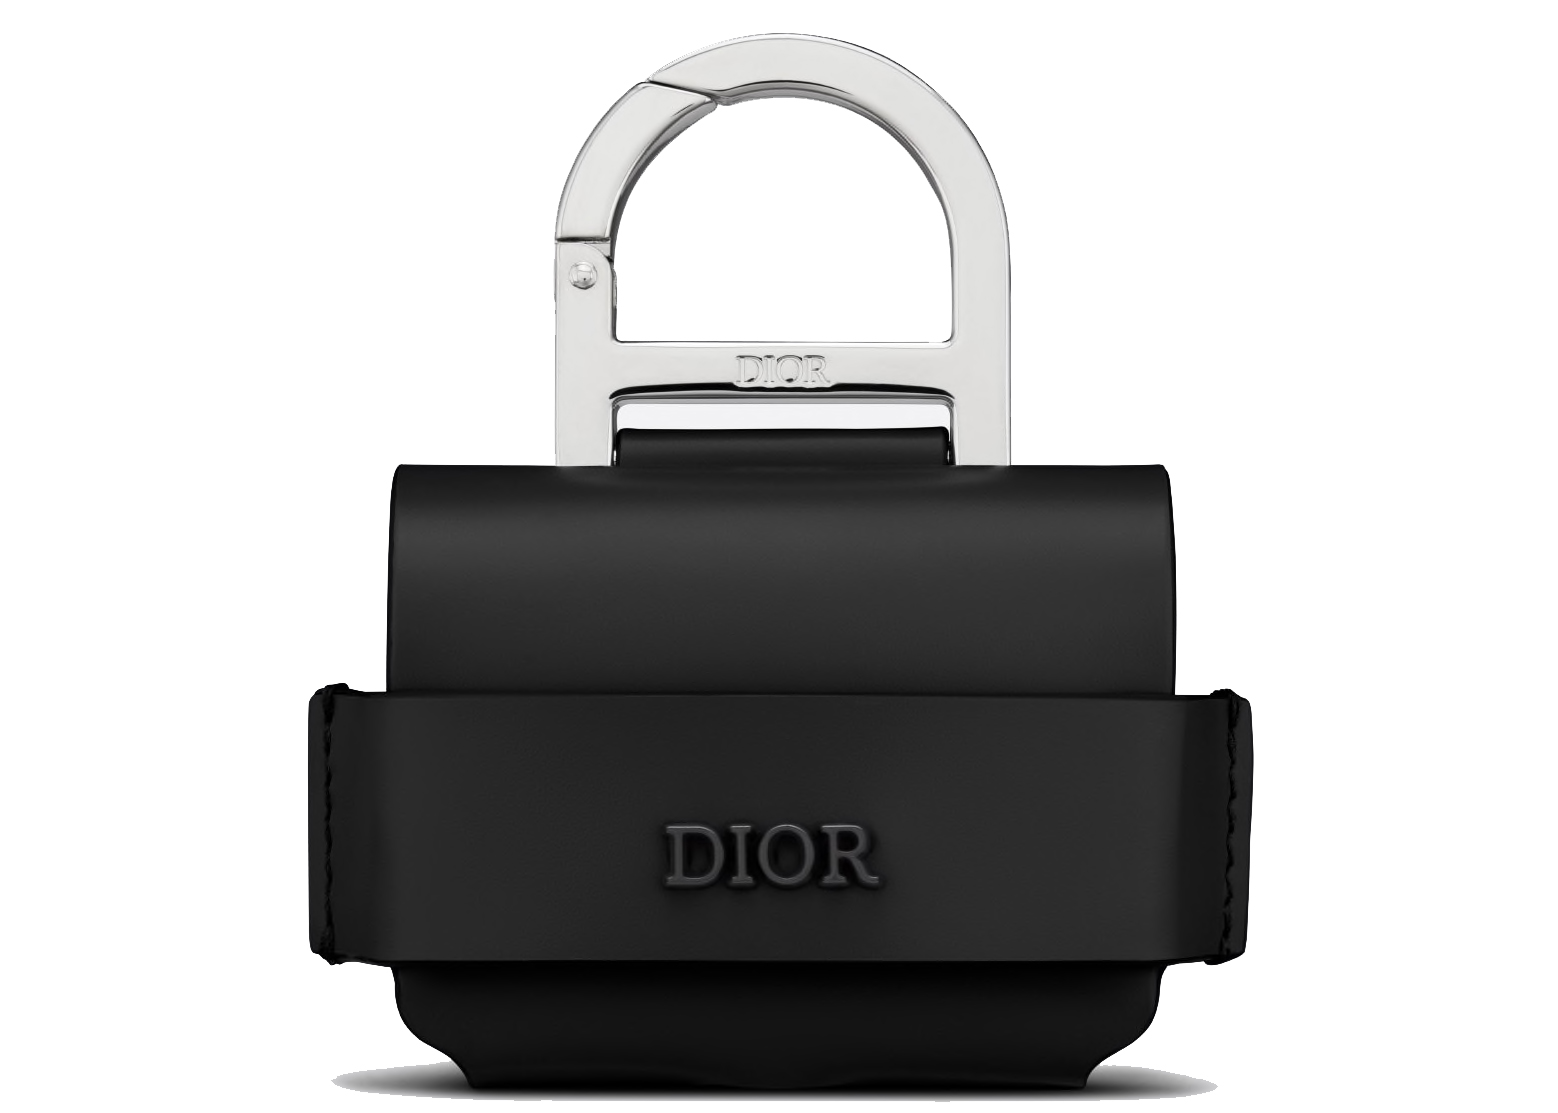 Dior AirPodsケース Dior airpods pro case - rehda.com